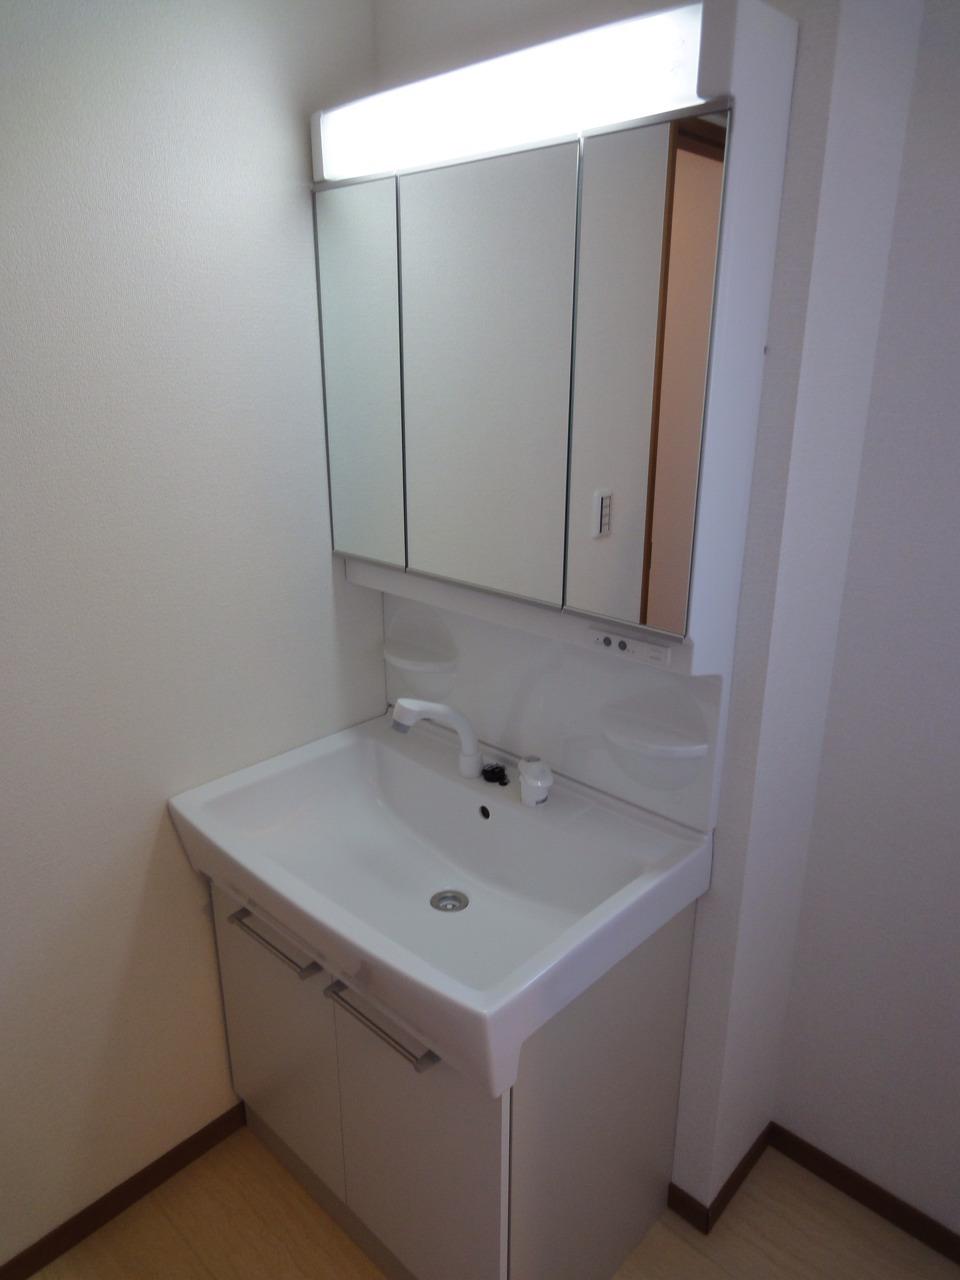 Wash basin, toilet. (2013.11.22 shooting)